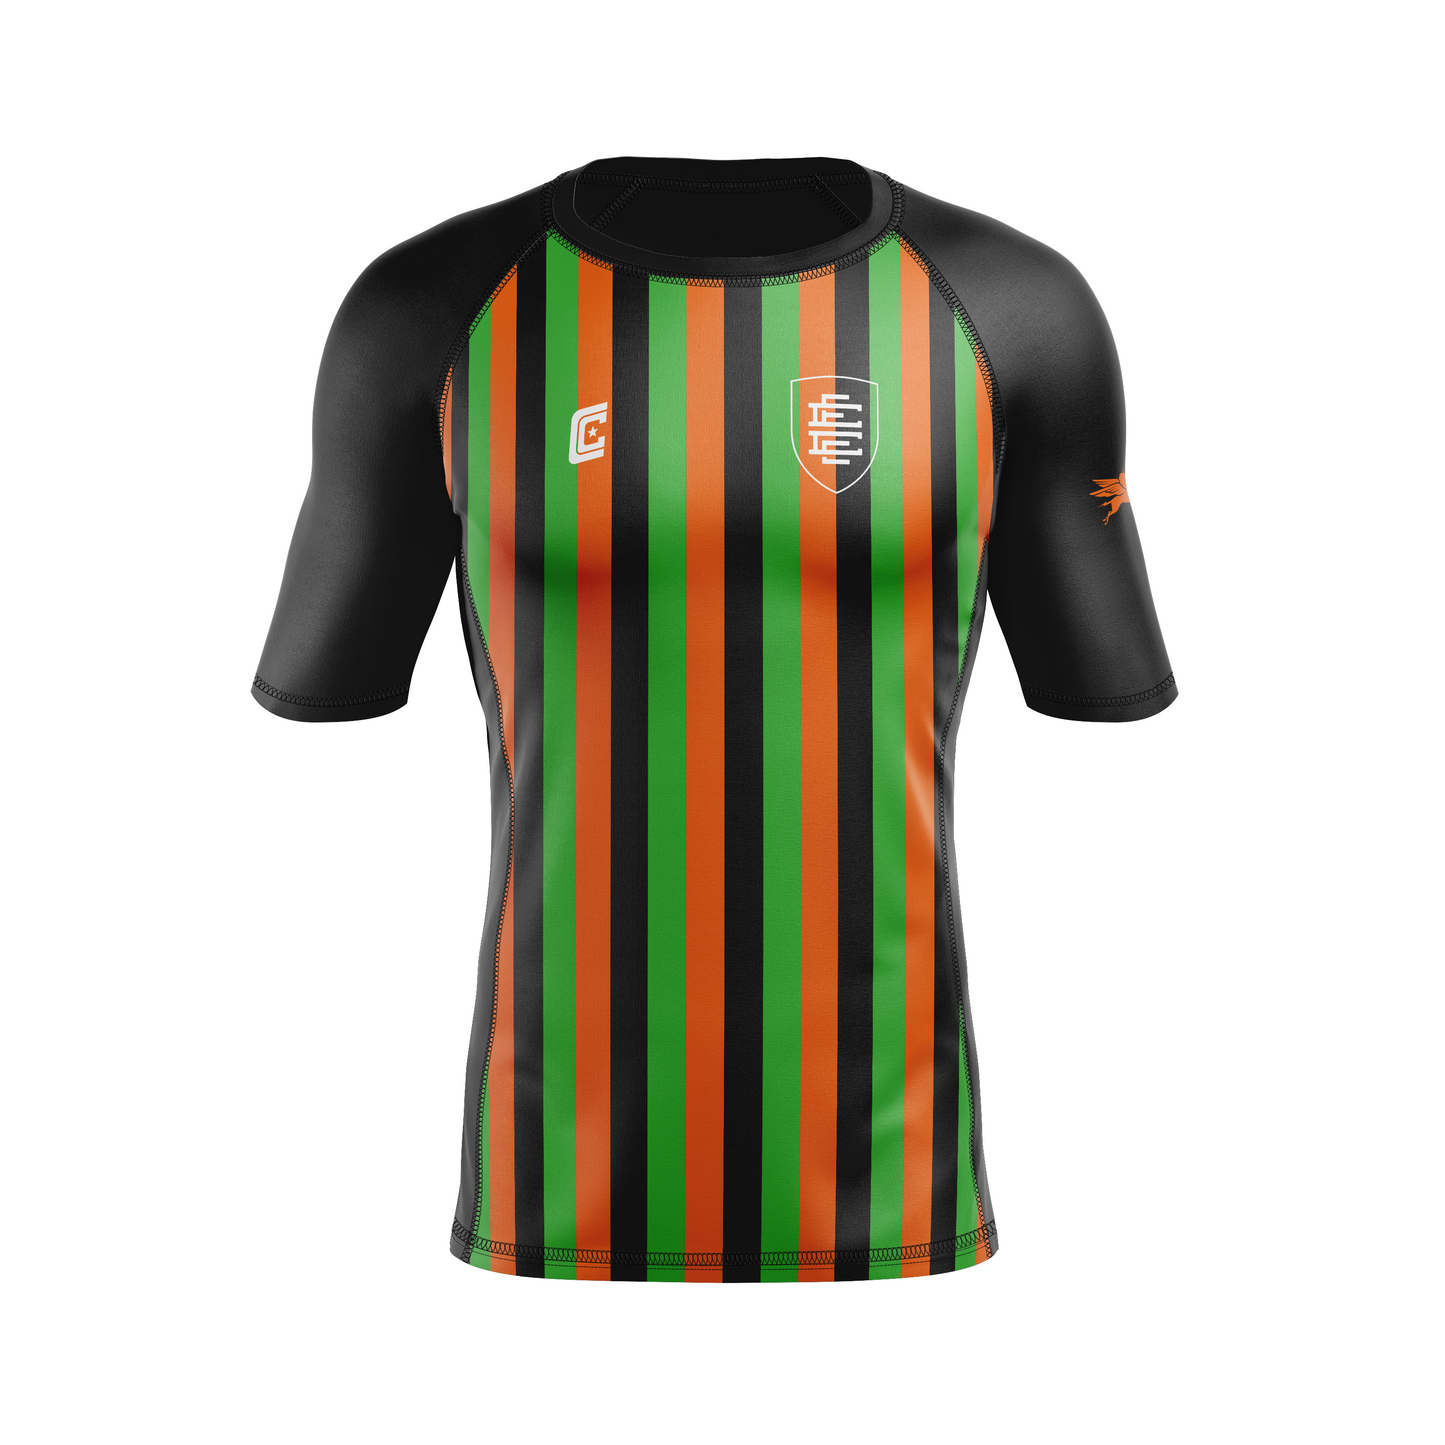 CCFC Golciaga United men's rash guard, black/orange/green